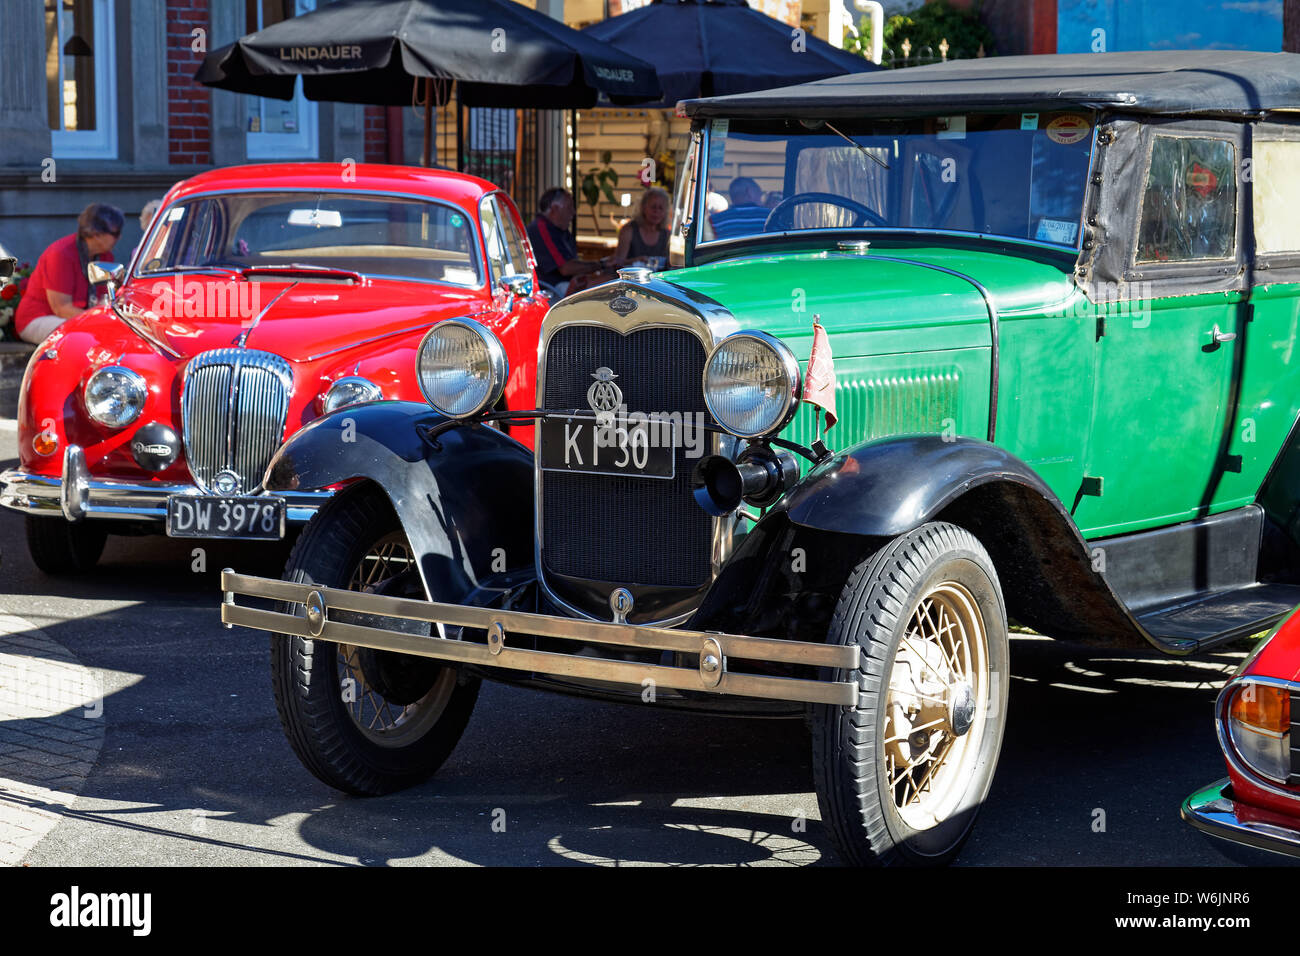 Motueka, Tasman/Nuova Zelanda - Febbraio 17, 2013: Vintage car show in Motueka High Street - close up di una Jaguar e una Ford. Di fronte al museo. Foto Stock